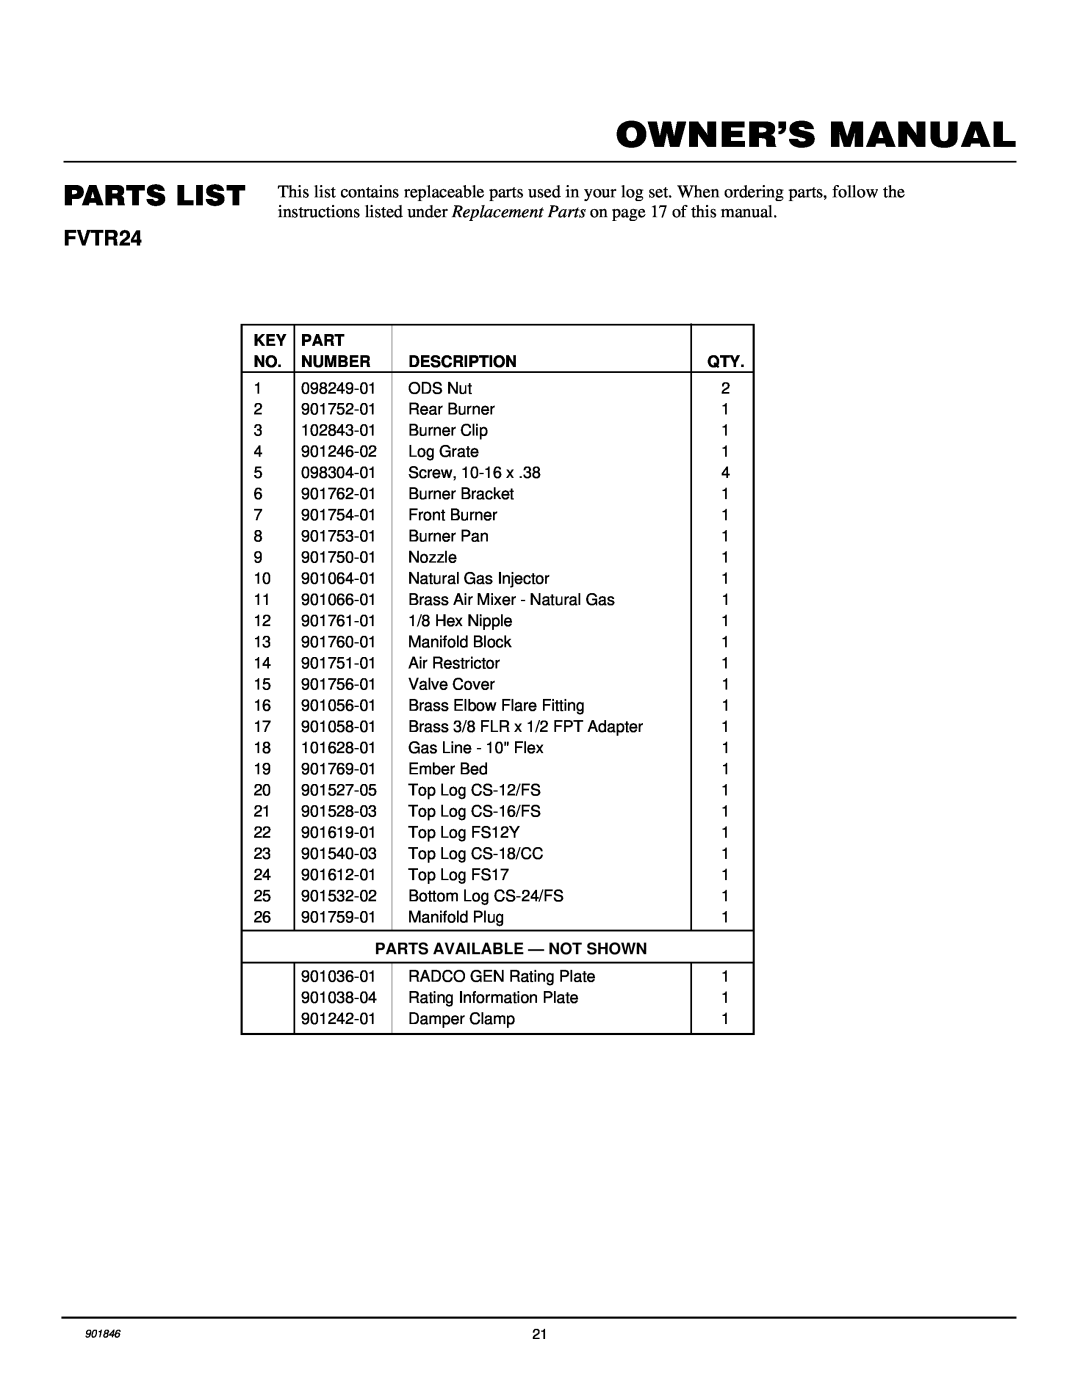 FMI FVTR24, FVTR18 installation manual Parts List, Number, Description, Parts Available - Not Shown 